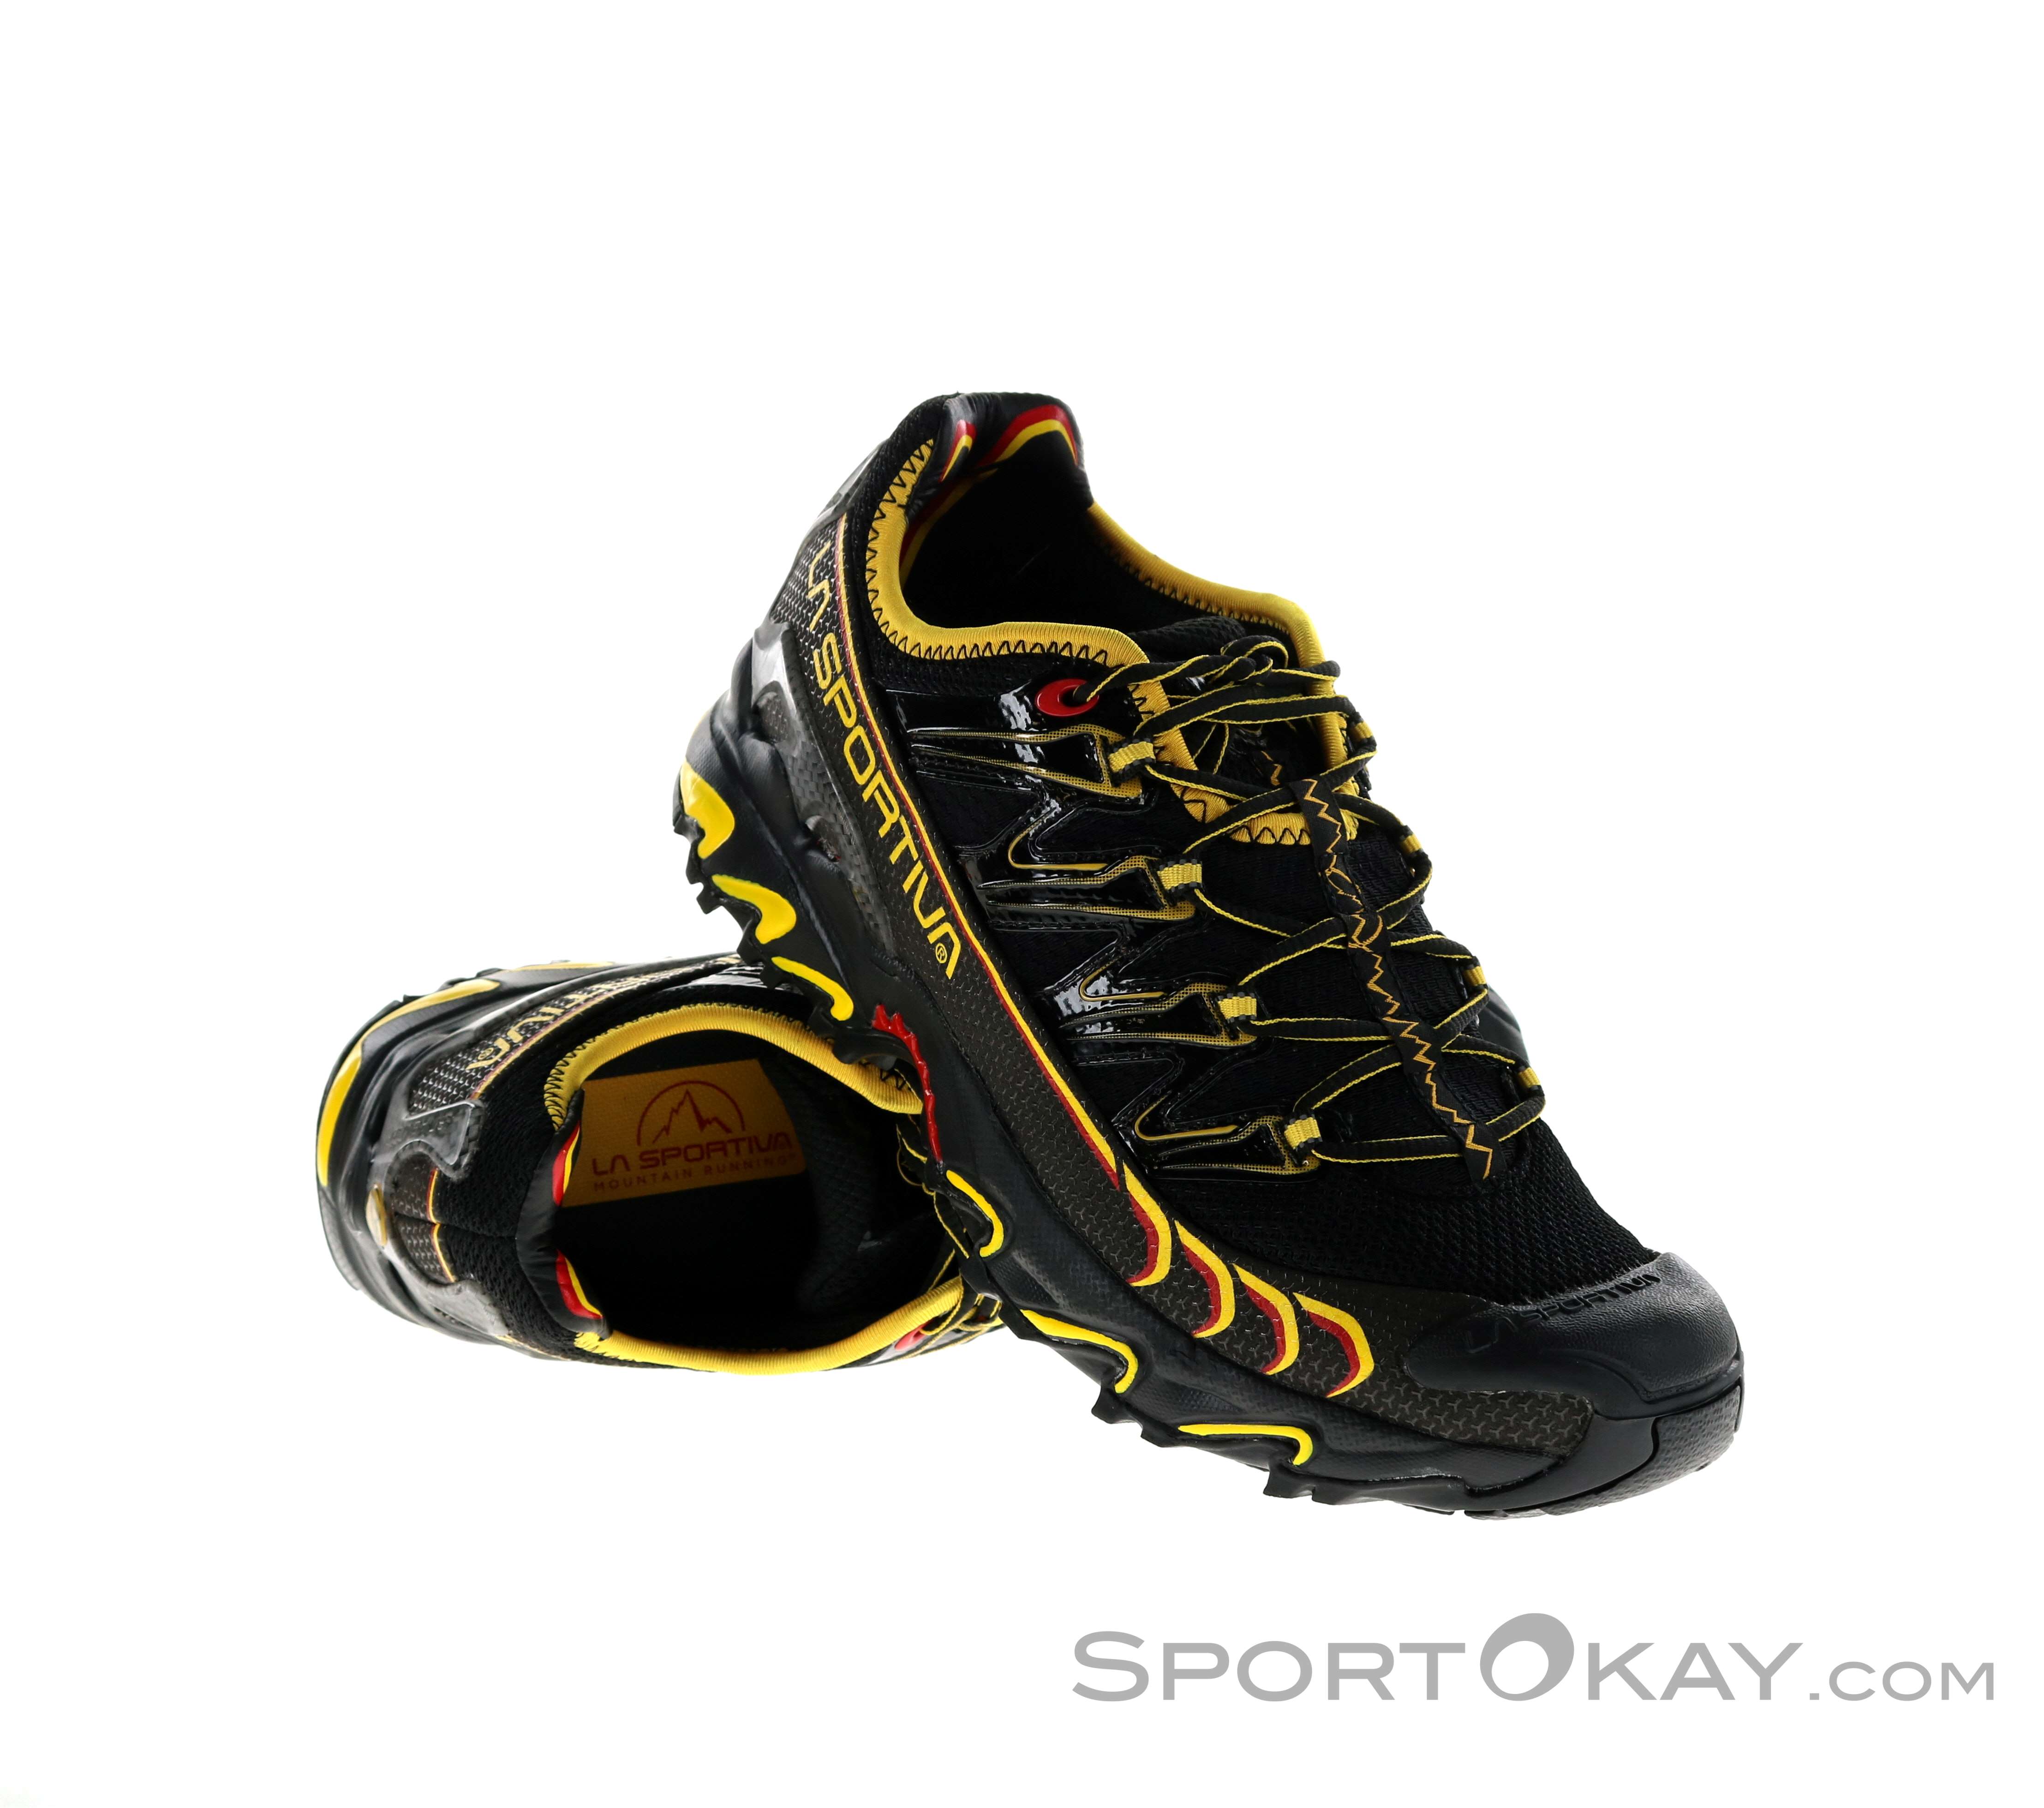 la sportiva ultra raptor trail running shoes